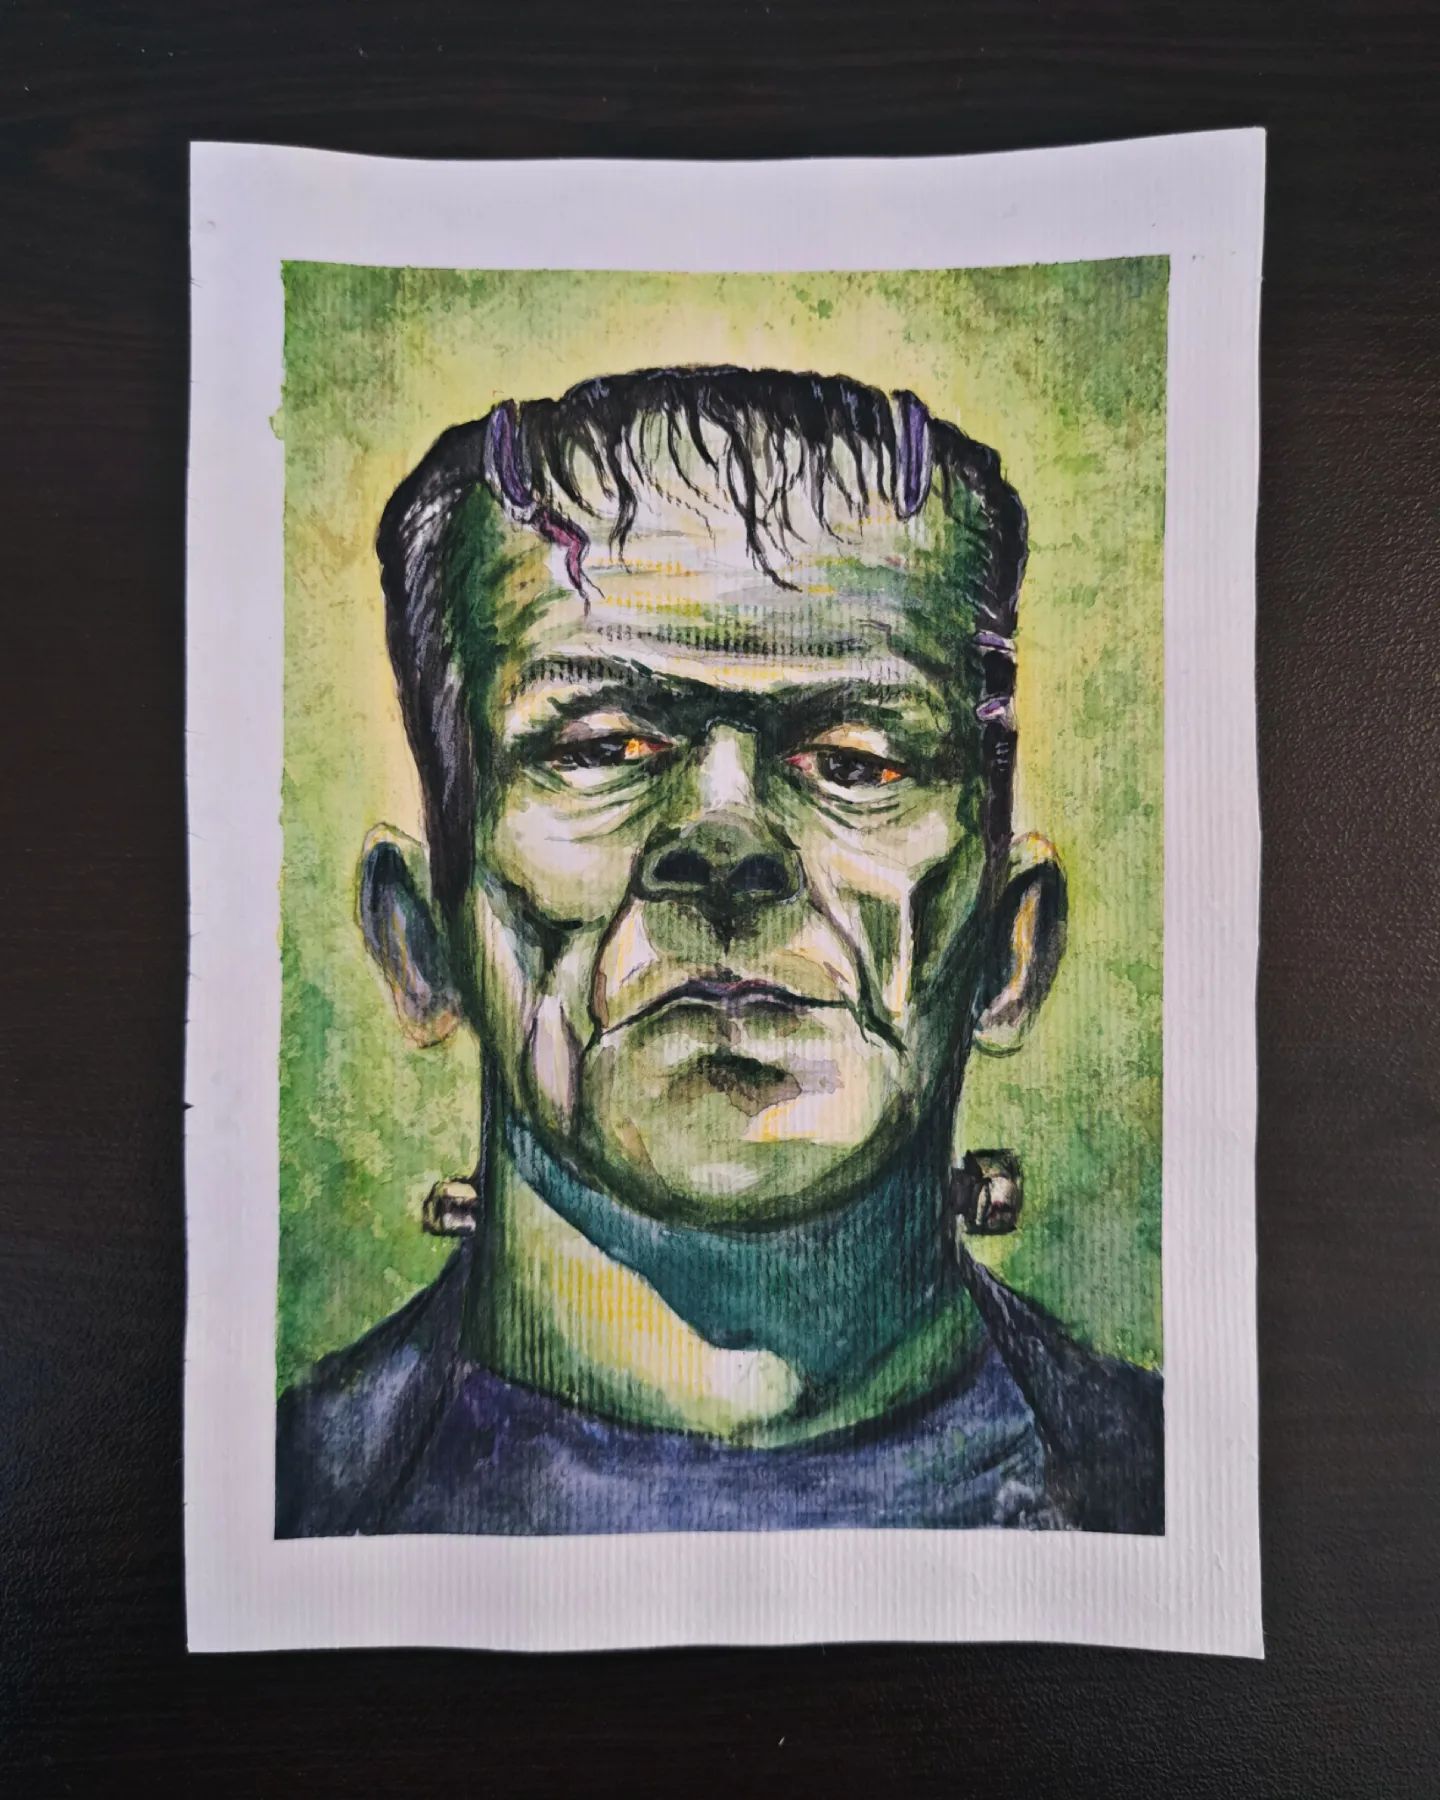 Universal Monsters 3 of 3: Frankenstein
.
.
. #halloween #universalmonsters #classic #frankenstein #universal #art #instaart #halloweenart #spooky #scary #watercolor #photooftheday #artist #halloween2023 #spookyseason #classicmonsters #cinema #vintage #monster #green